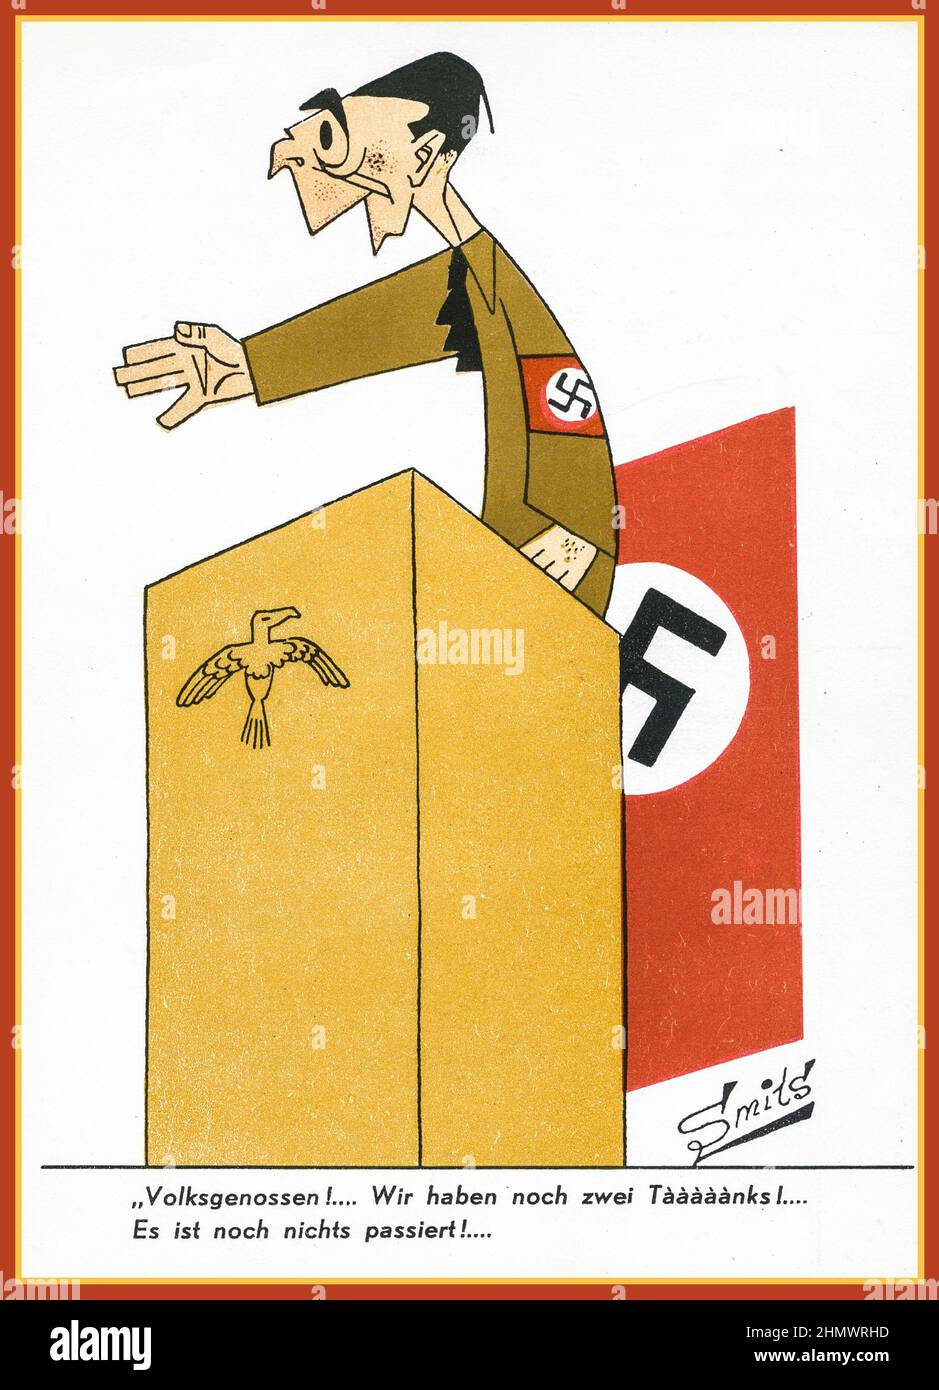 WW2 Dr Goebbels cartoon caricatura propaganda anti carta nazista “la gente ..Comrades..We ha ancora due carri armati e nulla è accaduto” Volksgenossen Wir haben noch zwei taaaaaanks es ist nichts passiert ! Dell'artista Semes Germania nazista seconda guerra mondiale seconda guerra mondiale 1944 Foto Stock